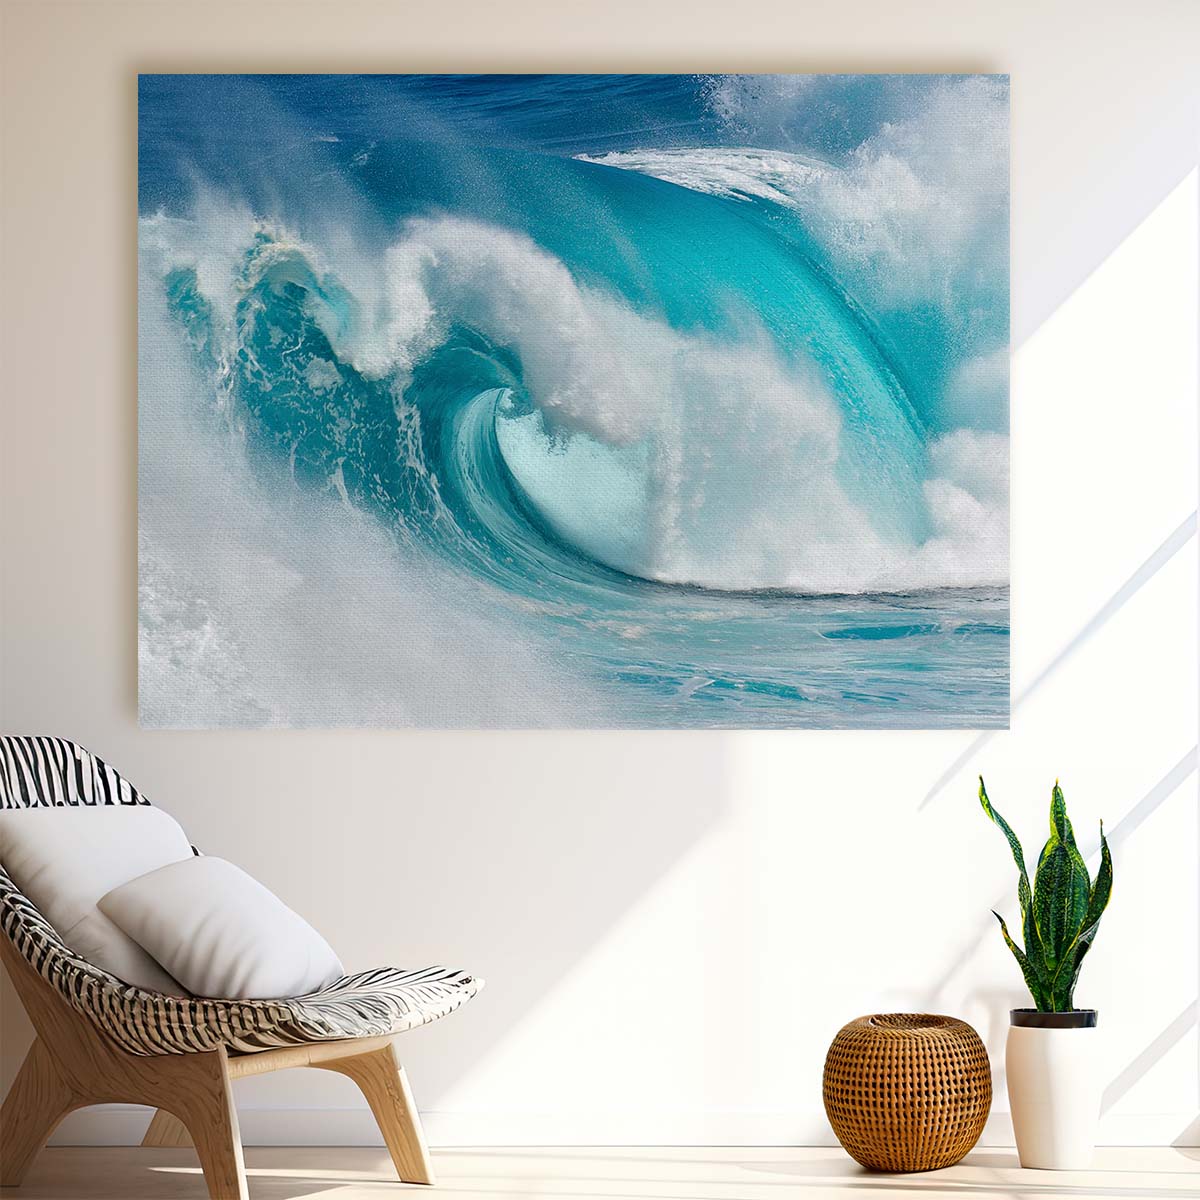 Turquoise Ocean Wave Splash Seascape Photography Wall Art